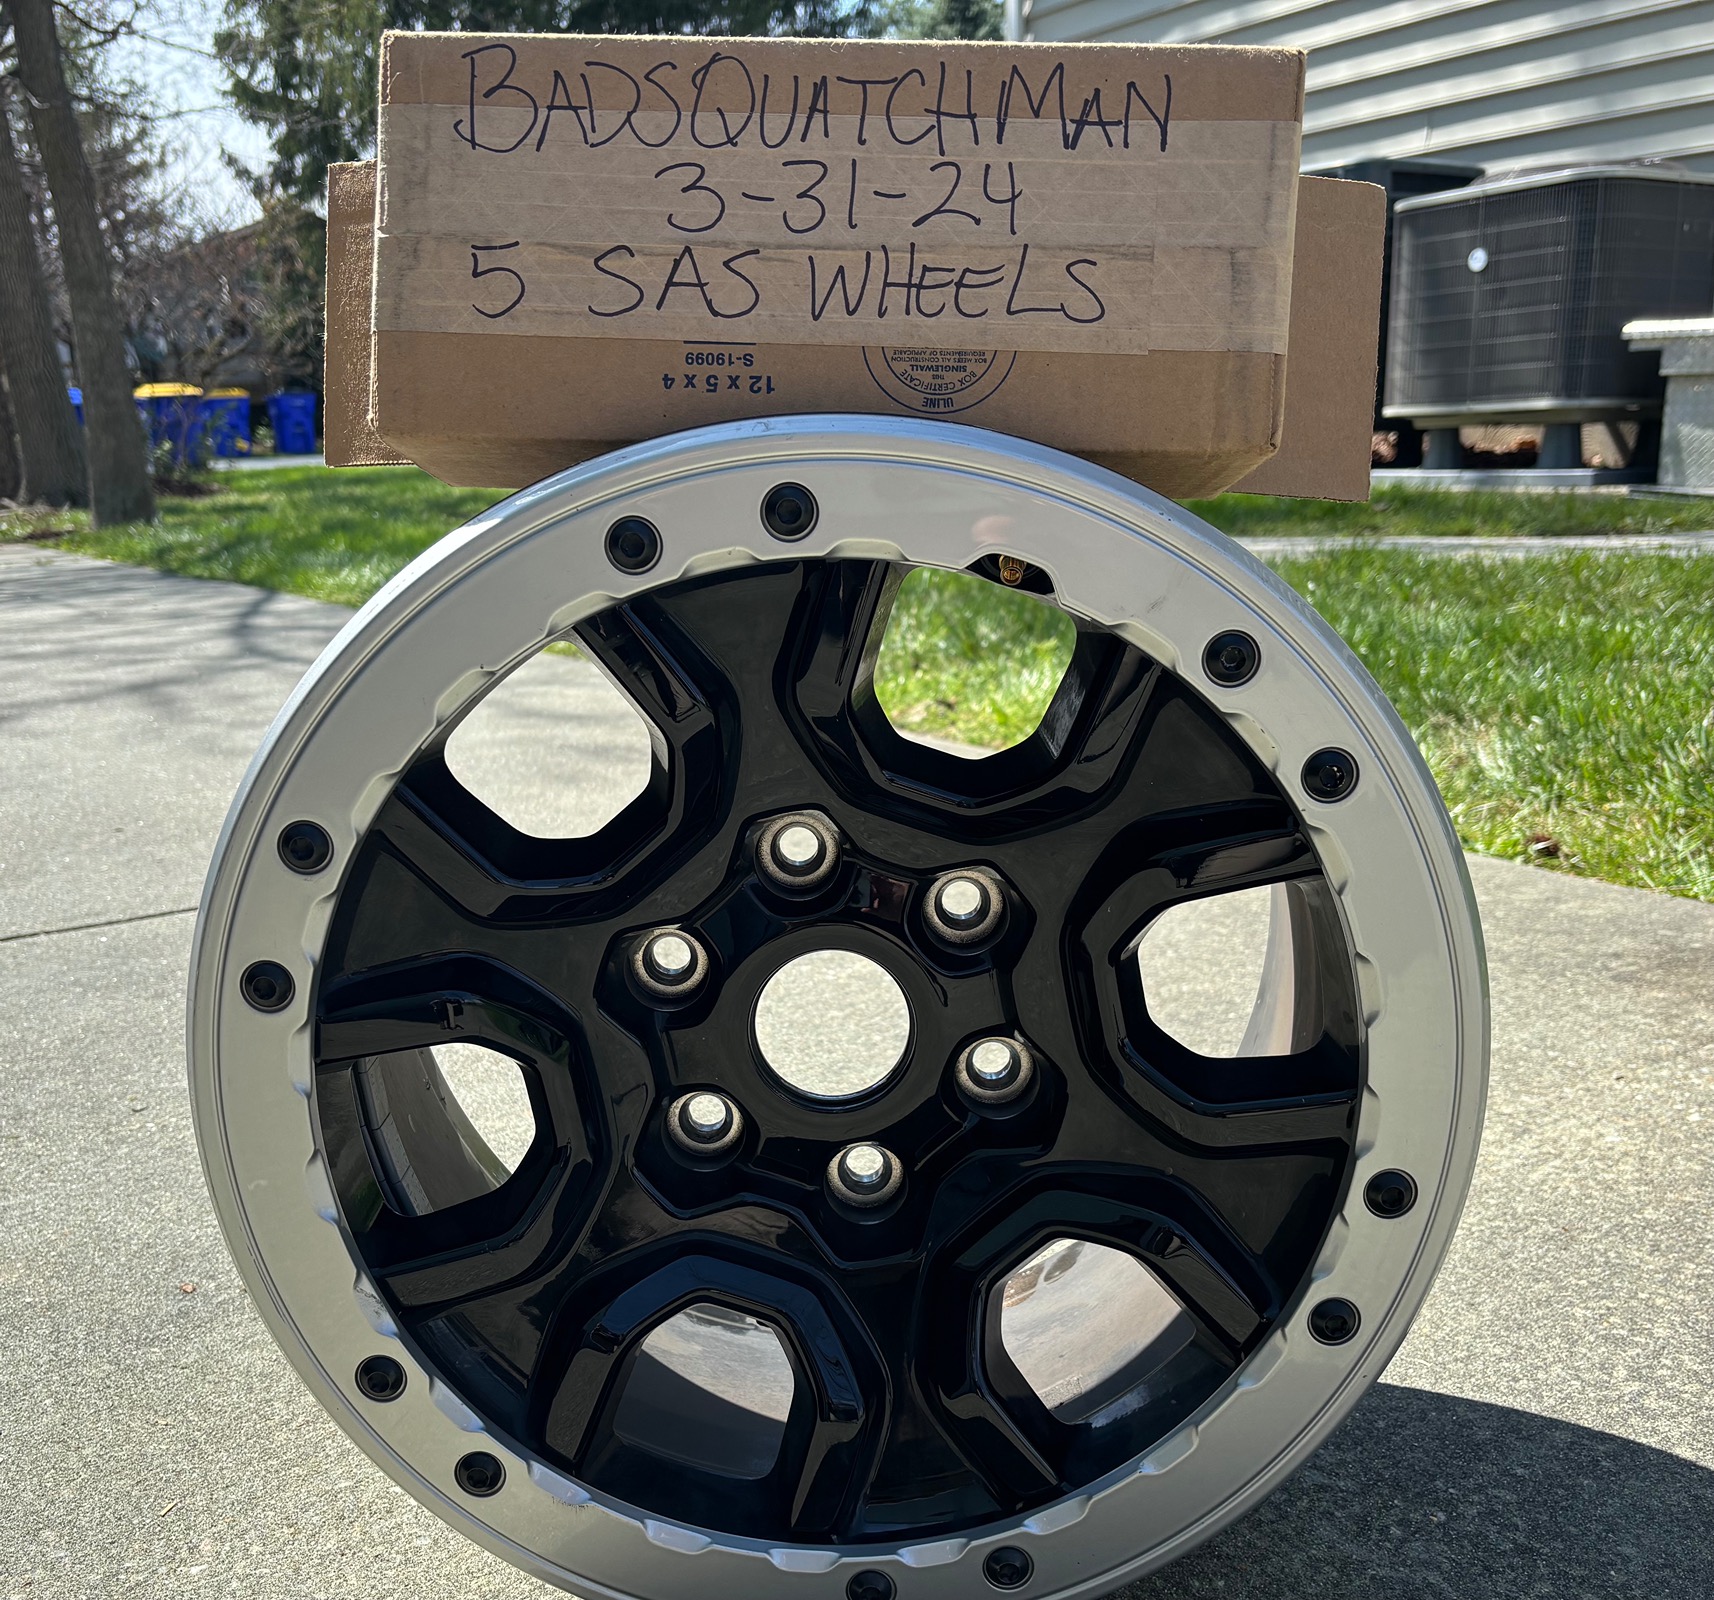 Ford Bronco Sasquatch wheels (5) for sale IMG_0329